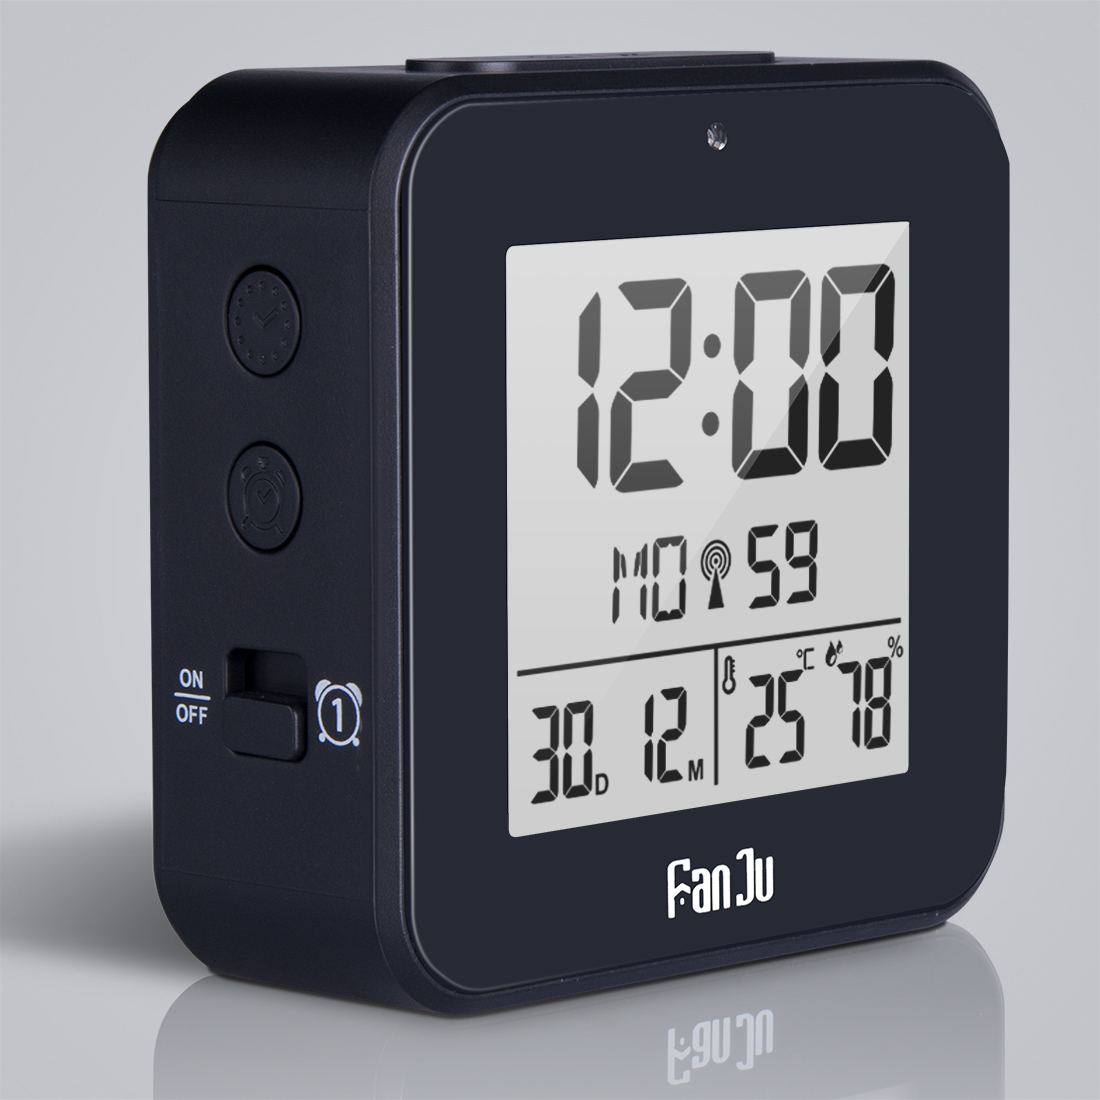 FJ3533 Digital Alarm Clock with Temperature